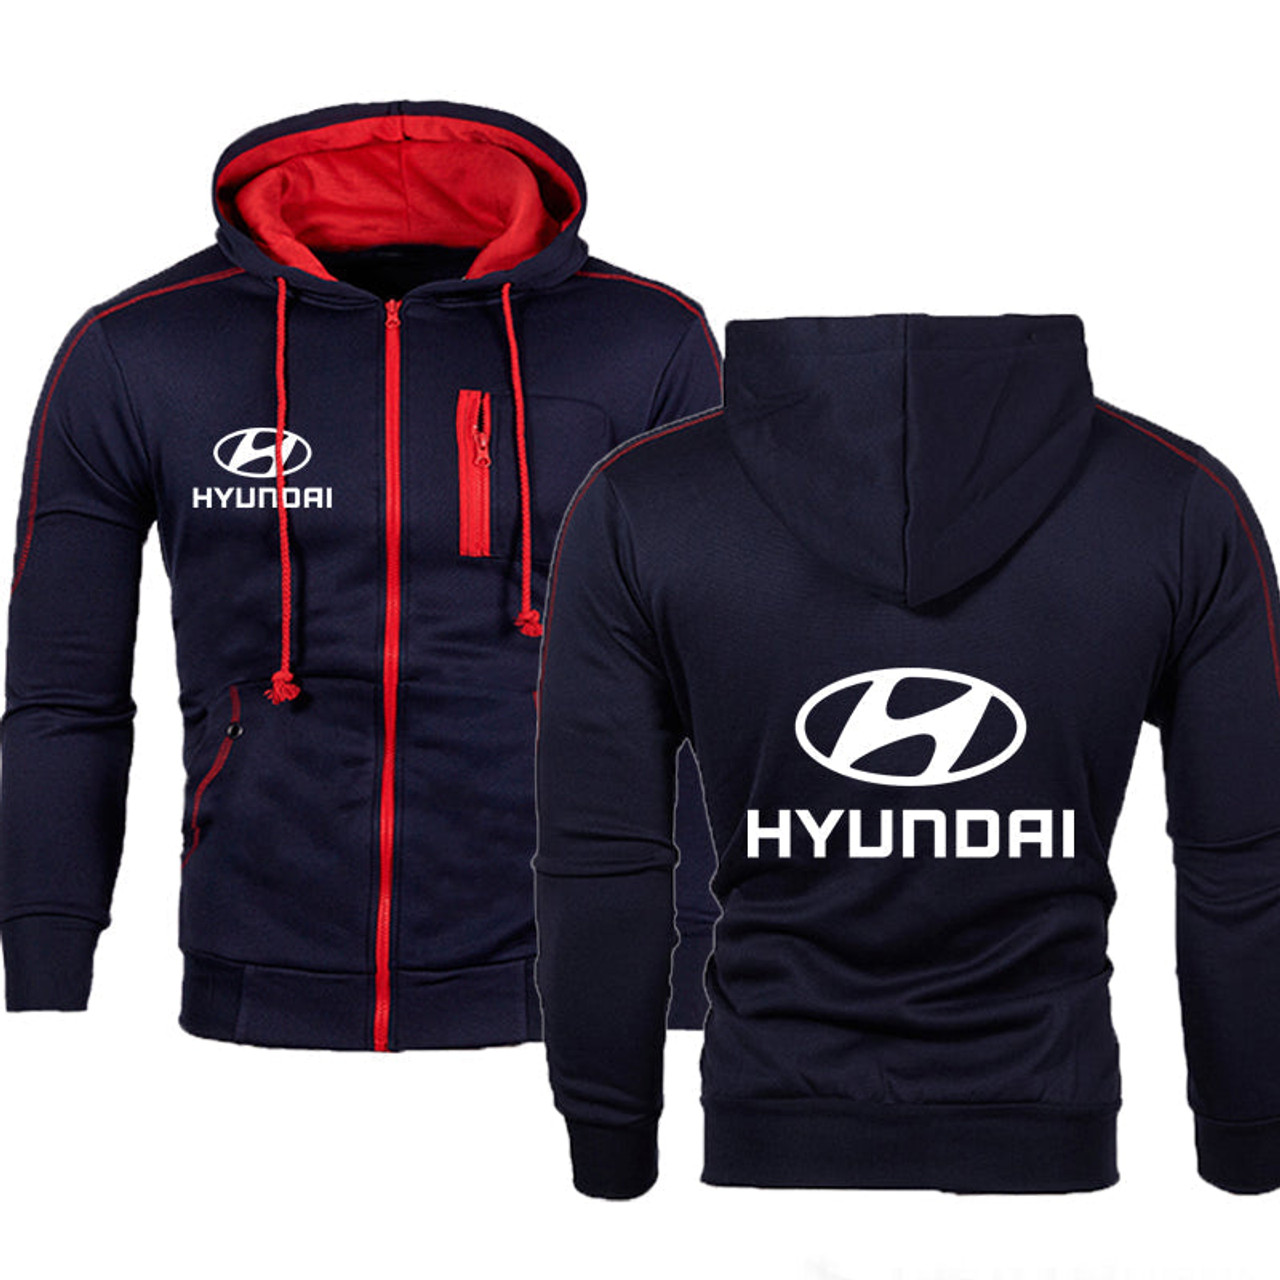 Hyundai Casual Hoodie Jacket Zip Track Suit Cotton Racing Sportswear